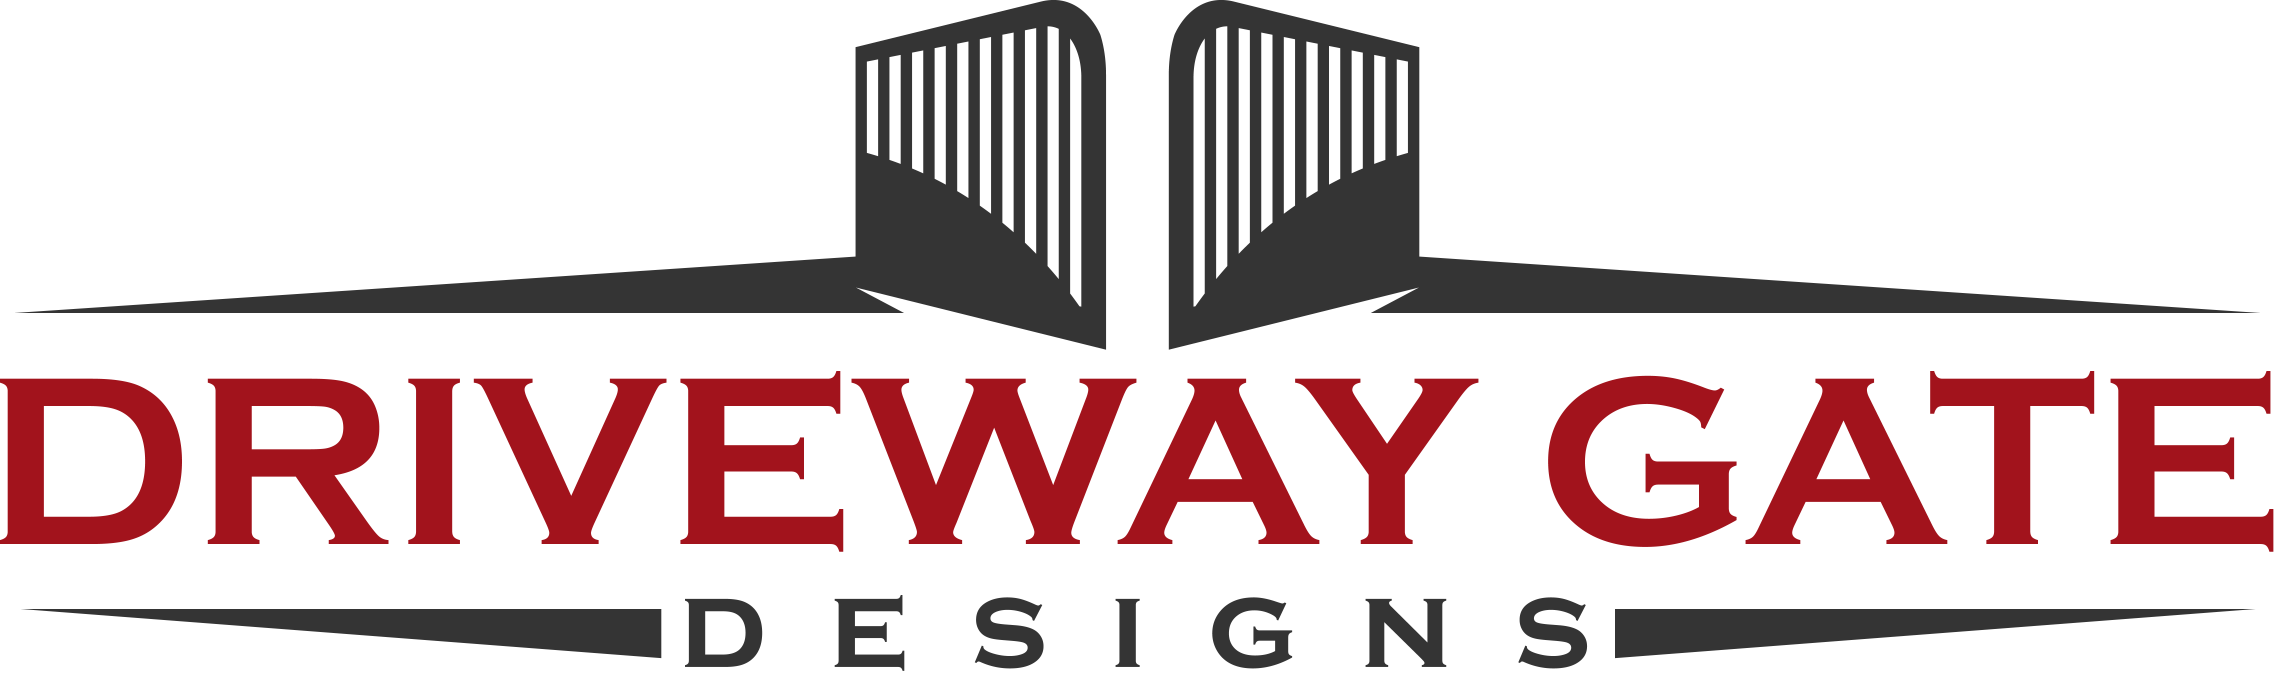 Driveway Gate Designs - Chimesofyourlife E4624 Wind Chime 27-inch Vizsla Silver (2275x673)